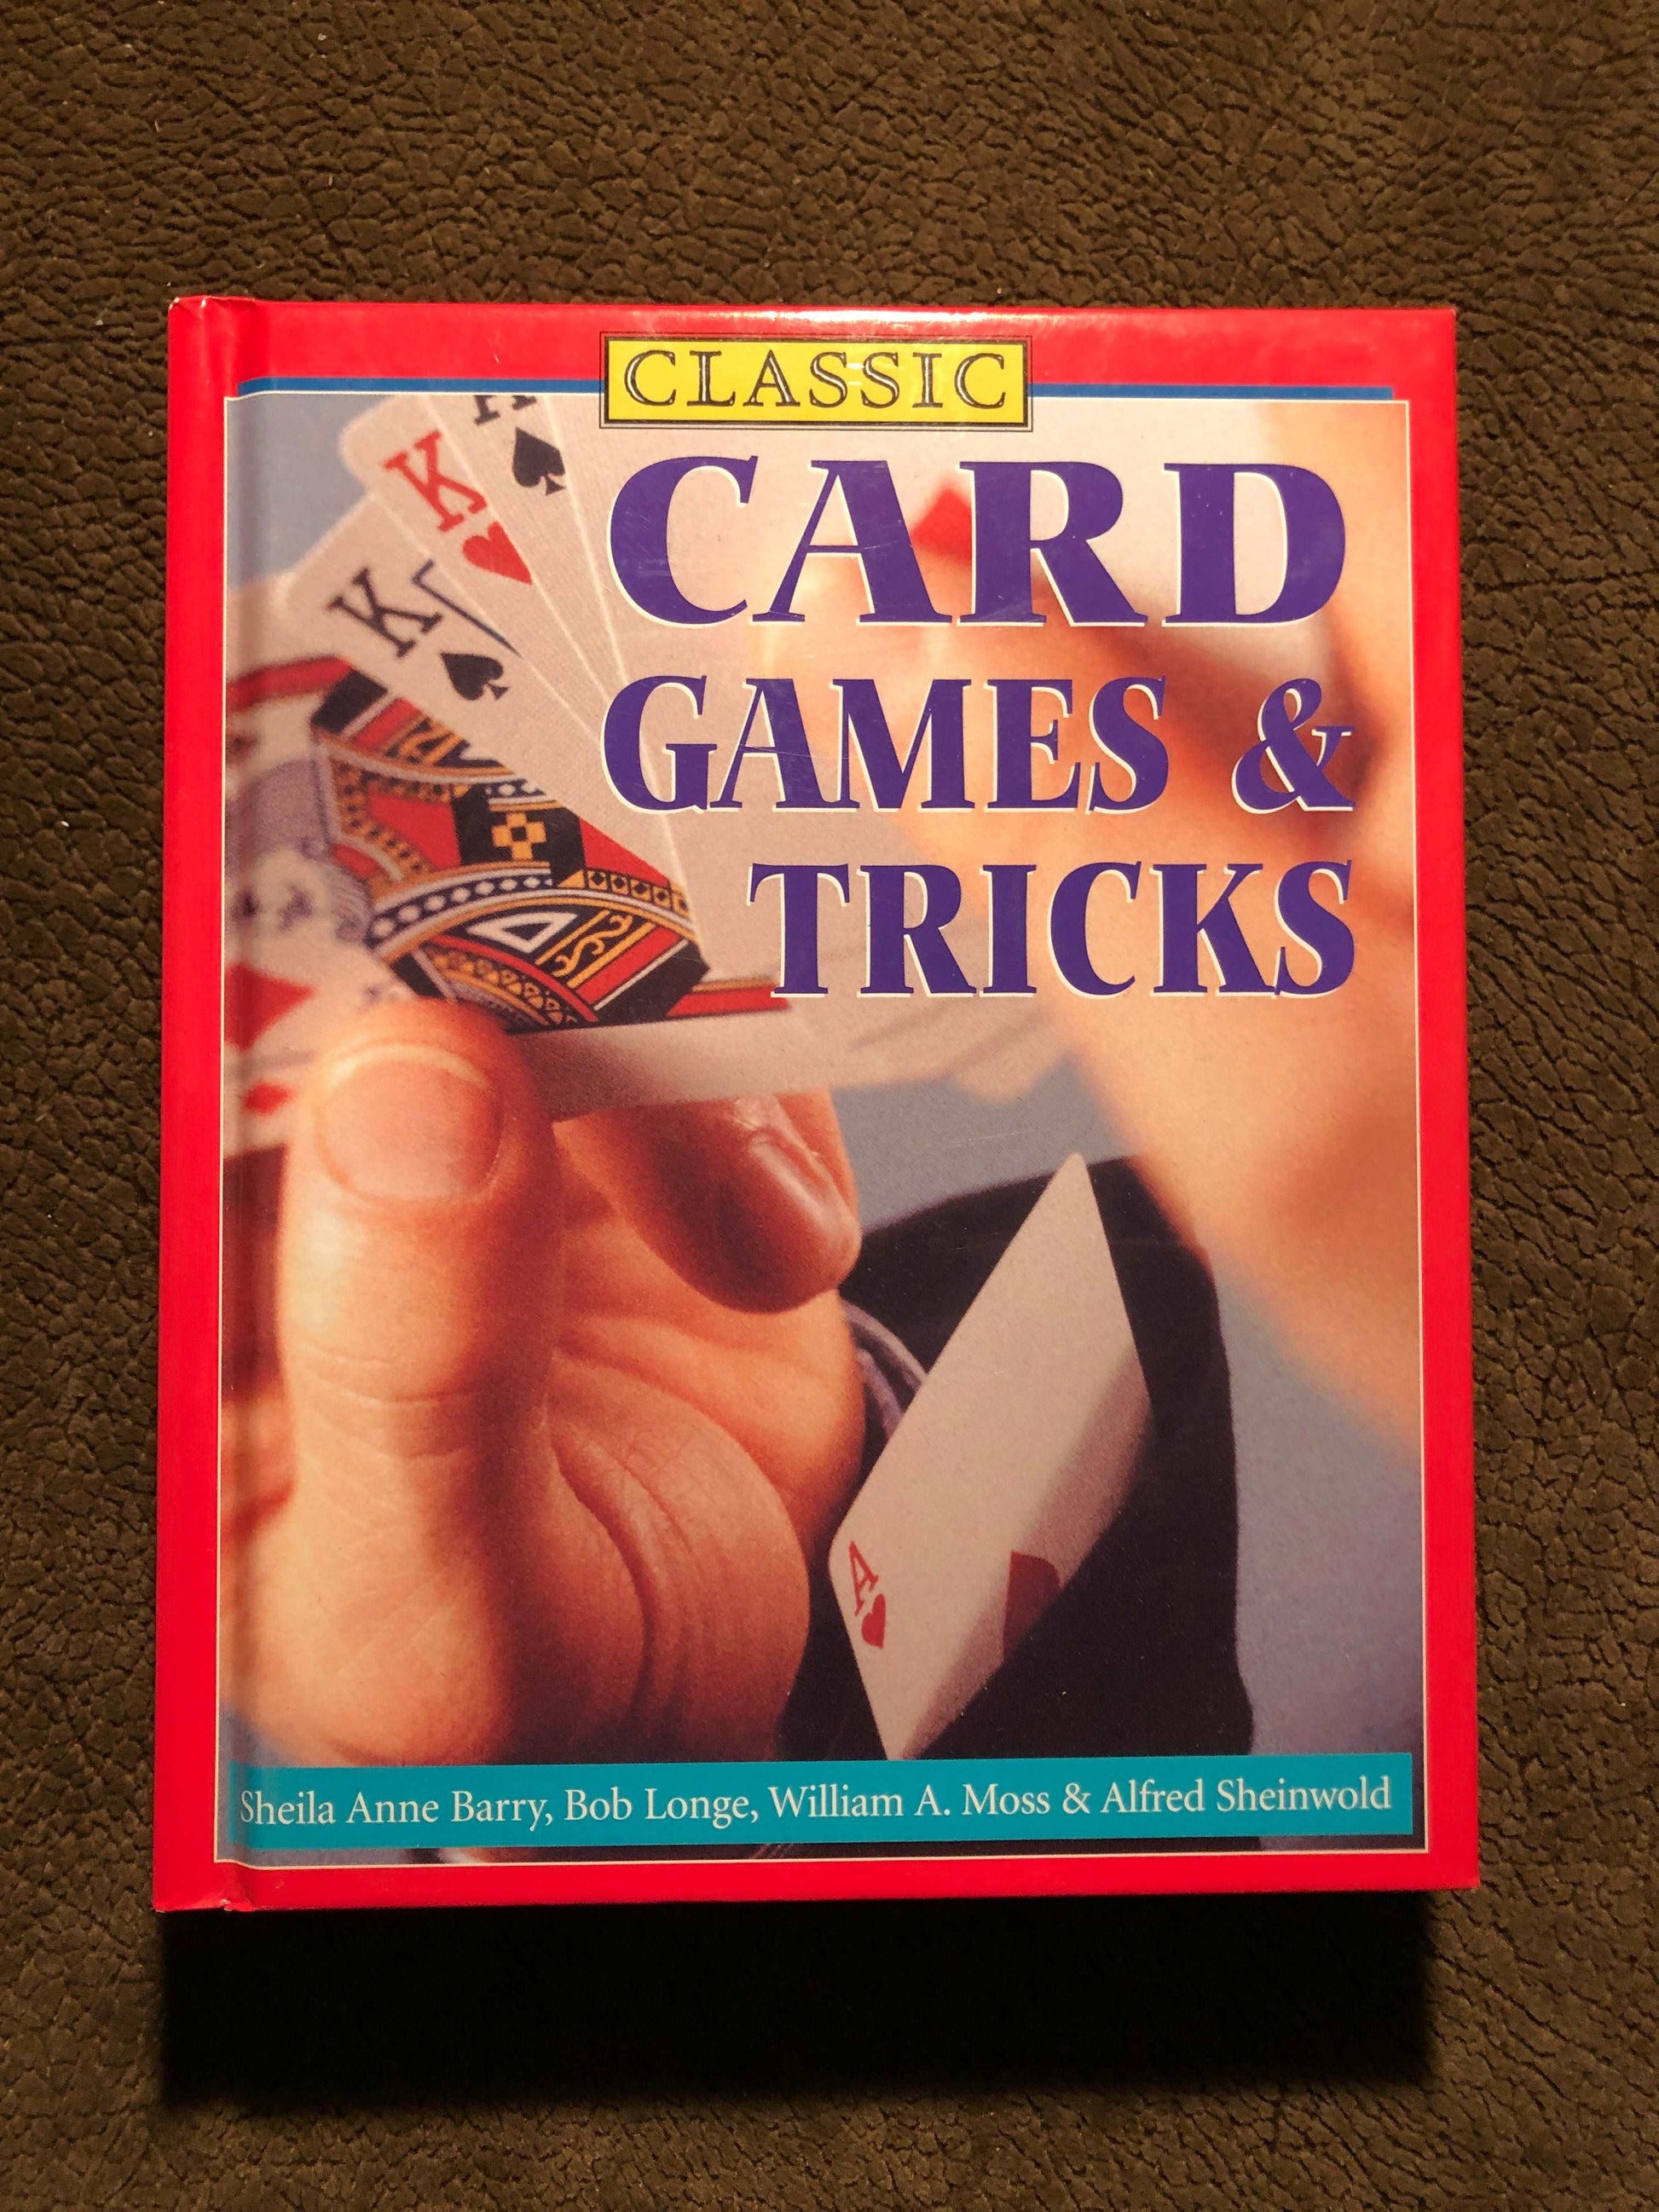 Card Games & Tricks - Longe, Barry, Moss & Sheinwold